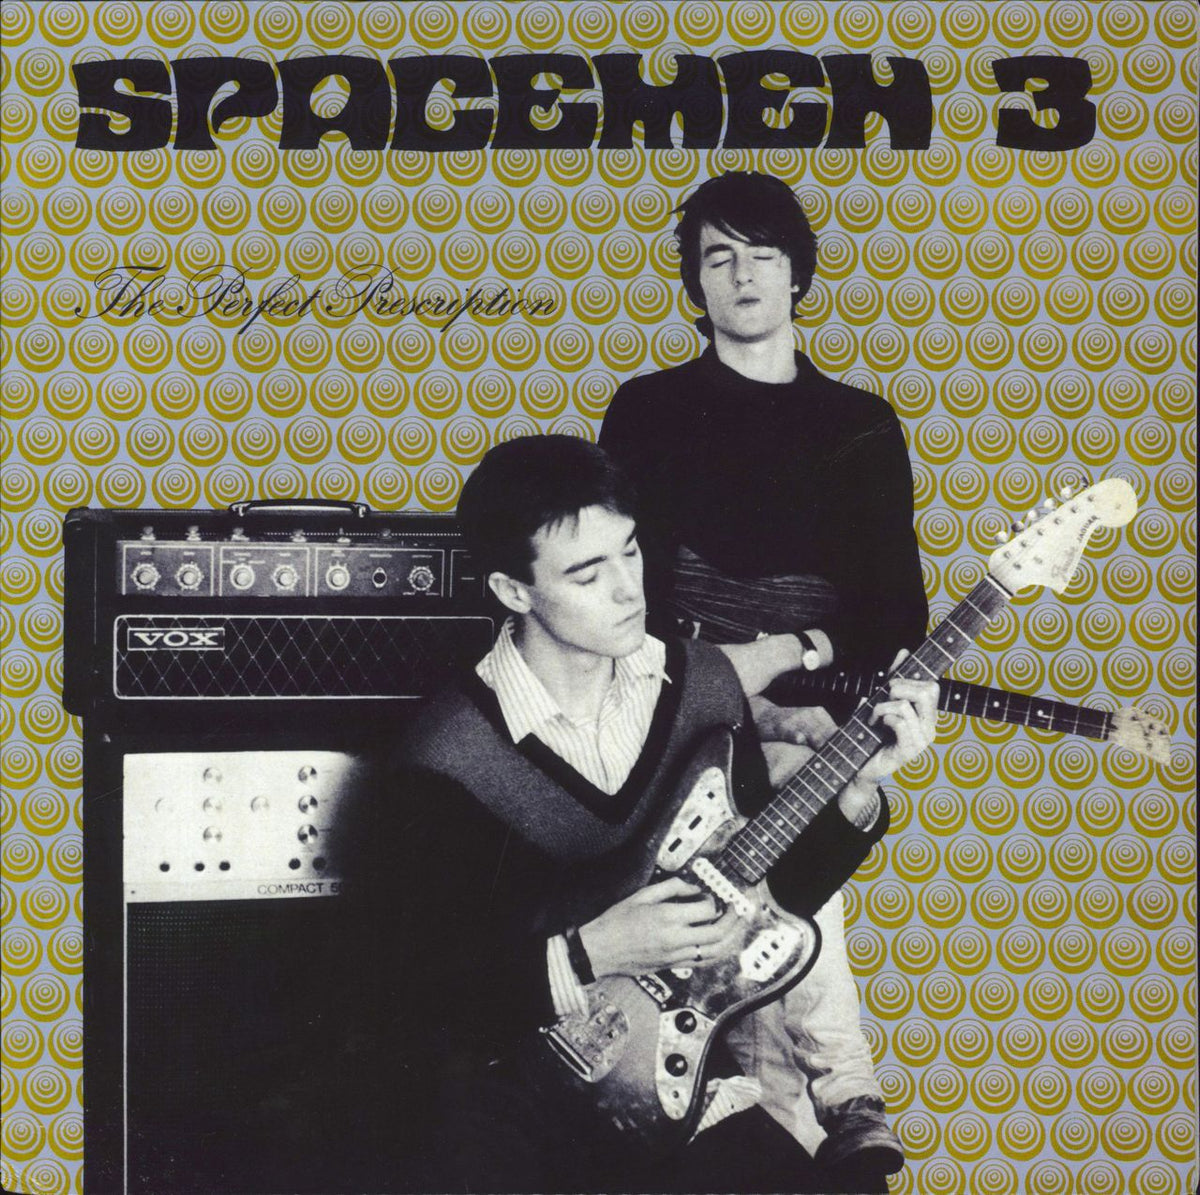 spacemen-3-the-perfect-prescription-180g-us-vinyl-lp-album-record-firelp016-819962_1200x1195.jpg